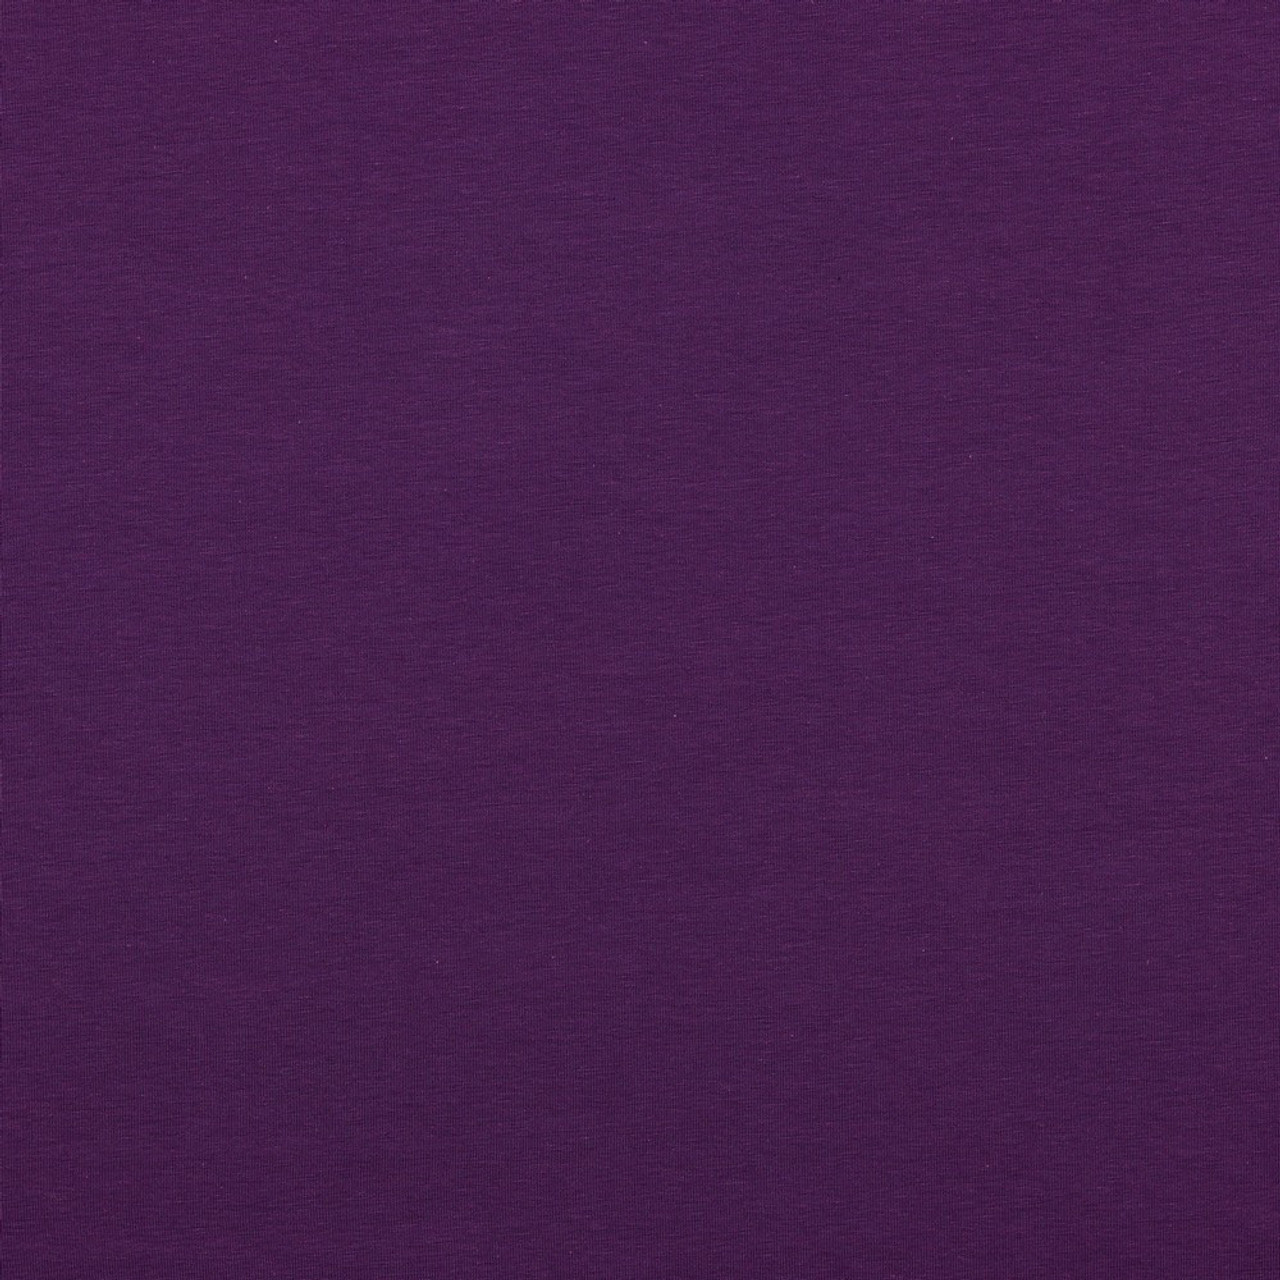 purple jersey fabric